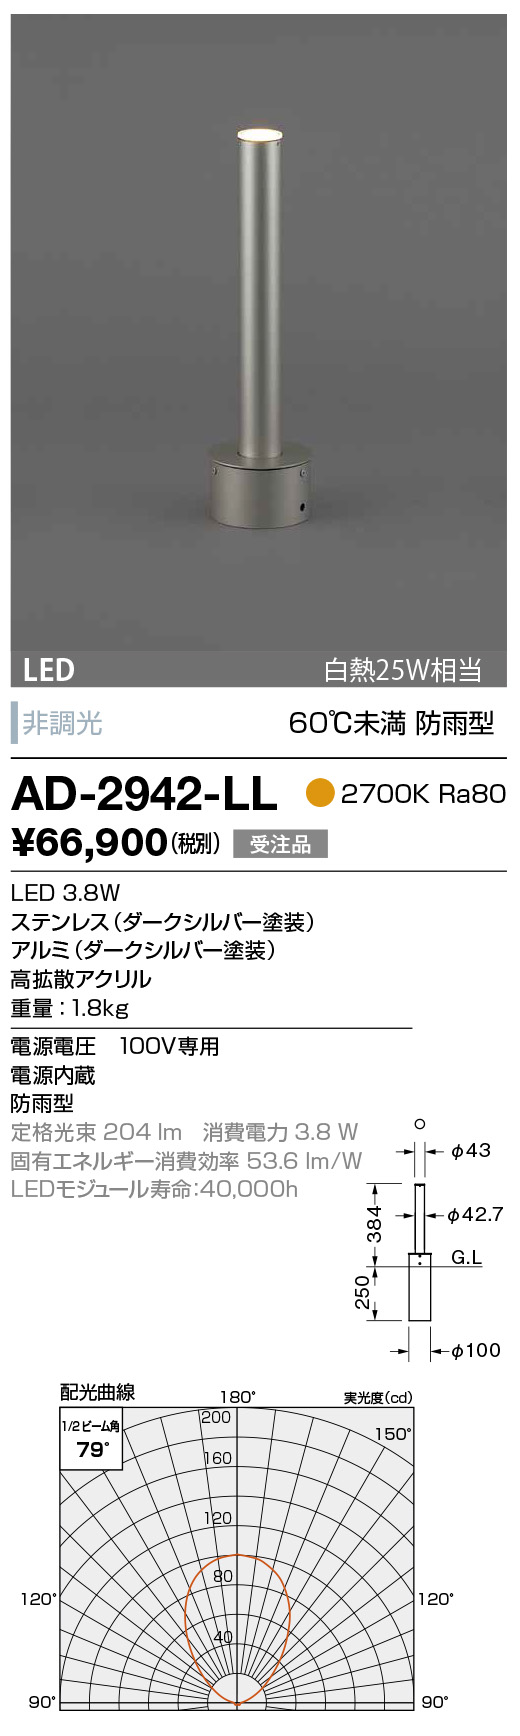 AD-2942-LL(山田照明) 商品詳細 ～ 照明器具・換気扇他、電設資材販売のブライト